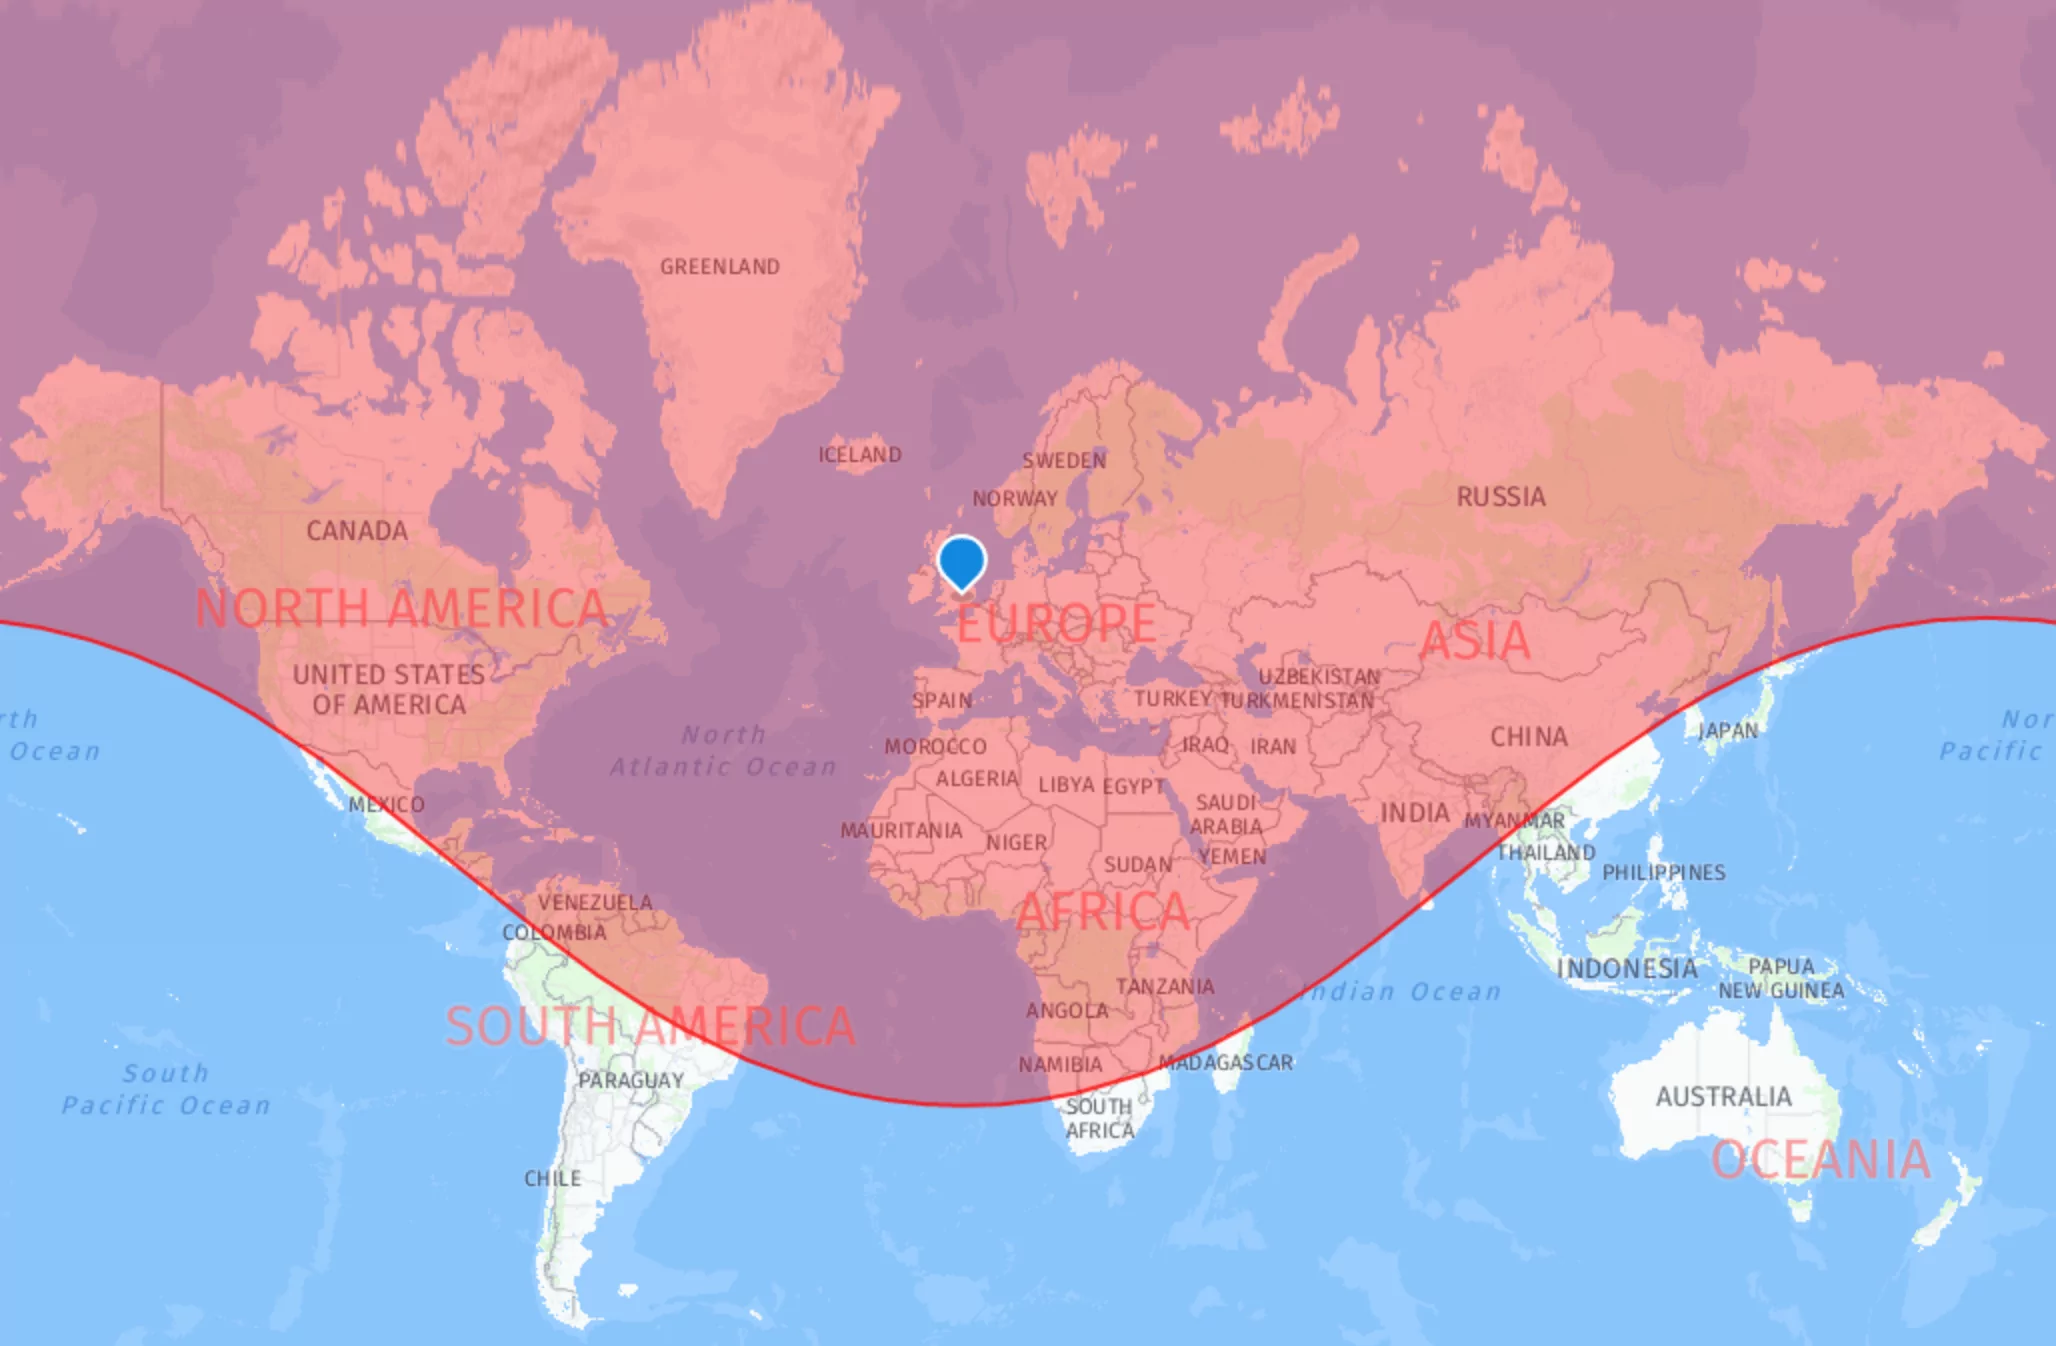 Dassault Falcon 900LX range map with london as the origin city - range of 4750 nautical miles